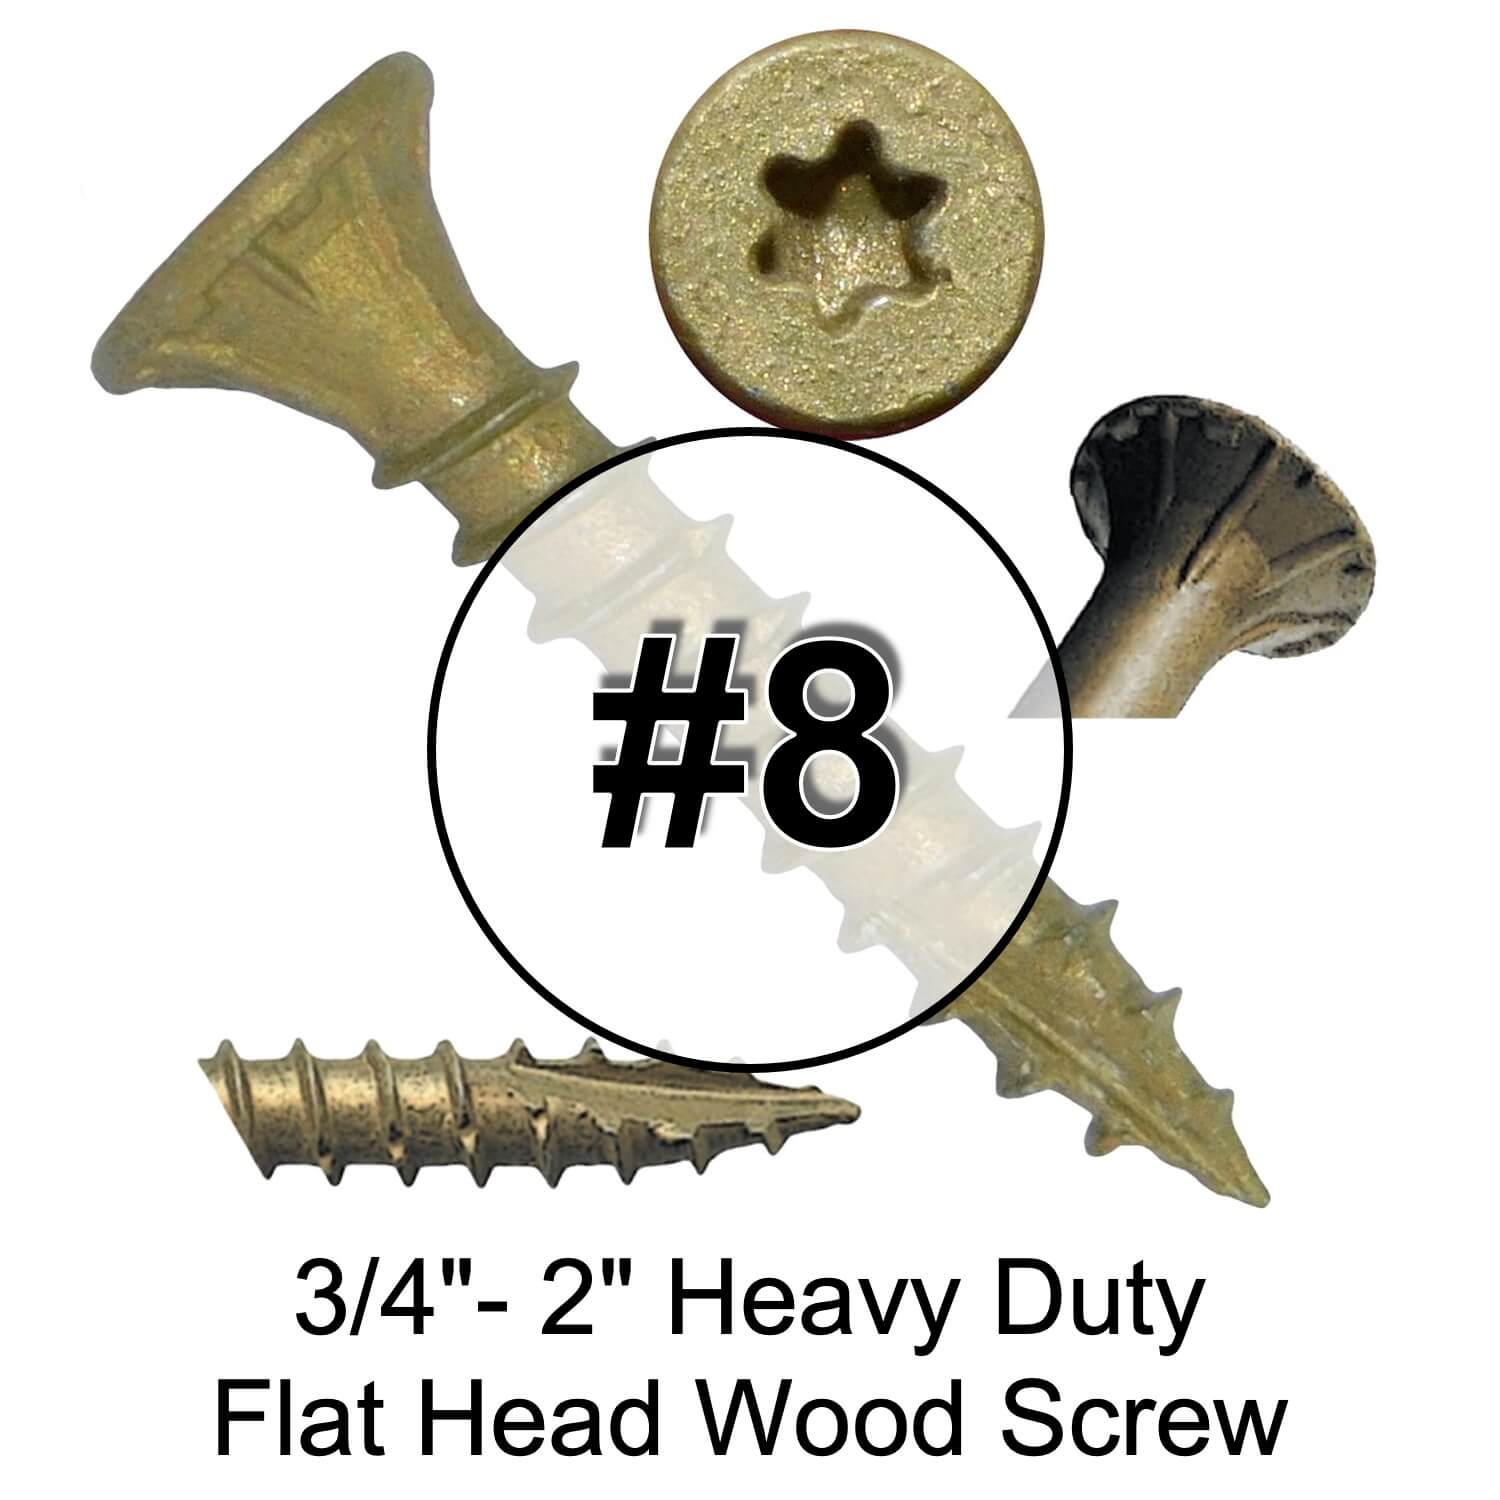 Jake Sales - #8 x 1-1/4 Gold Star Wood Screw Torx/Star Drive Head (1 Pound - 231 Approx. Screw Count) - Multipurpose Purpose Torx/Star Drive Wood